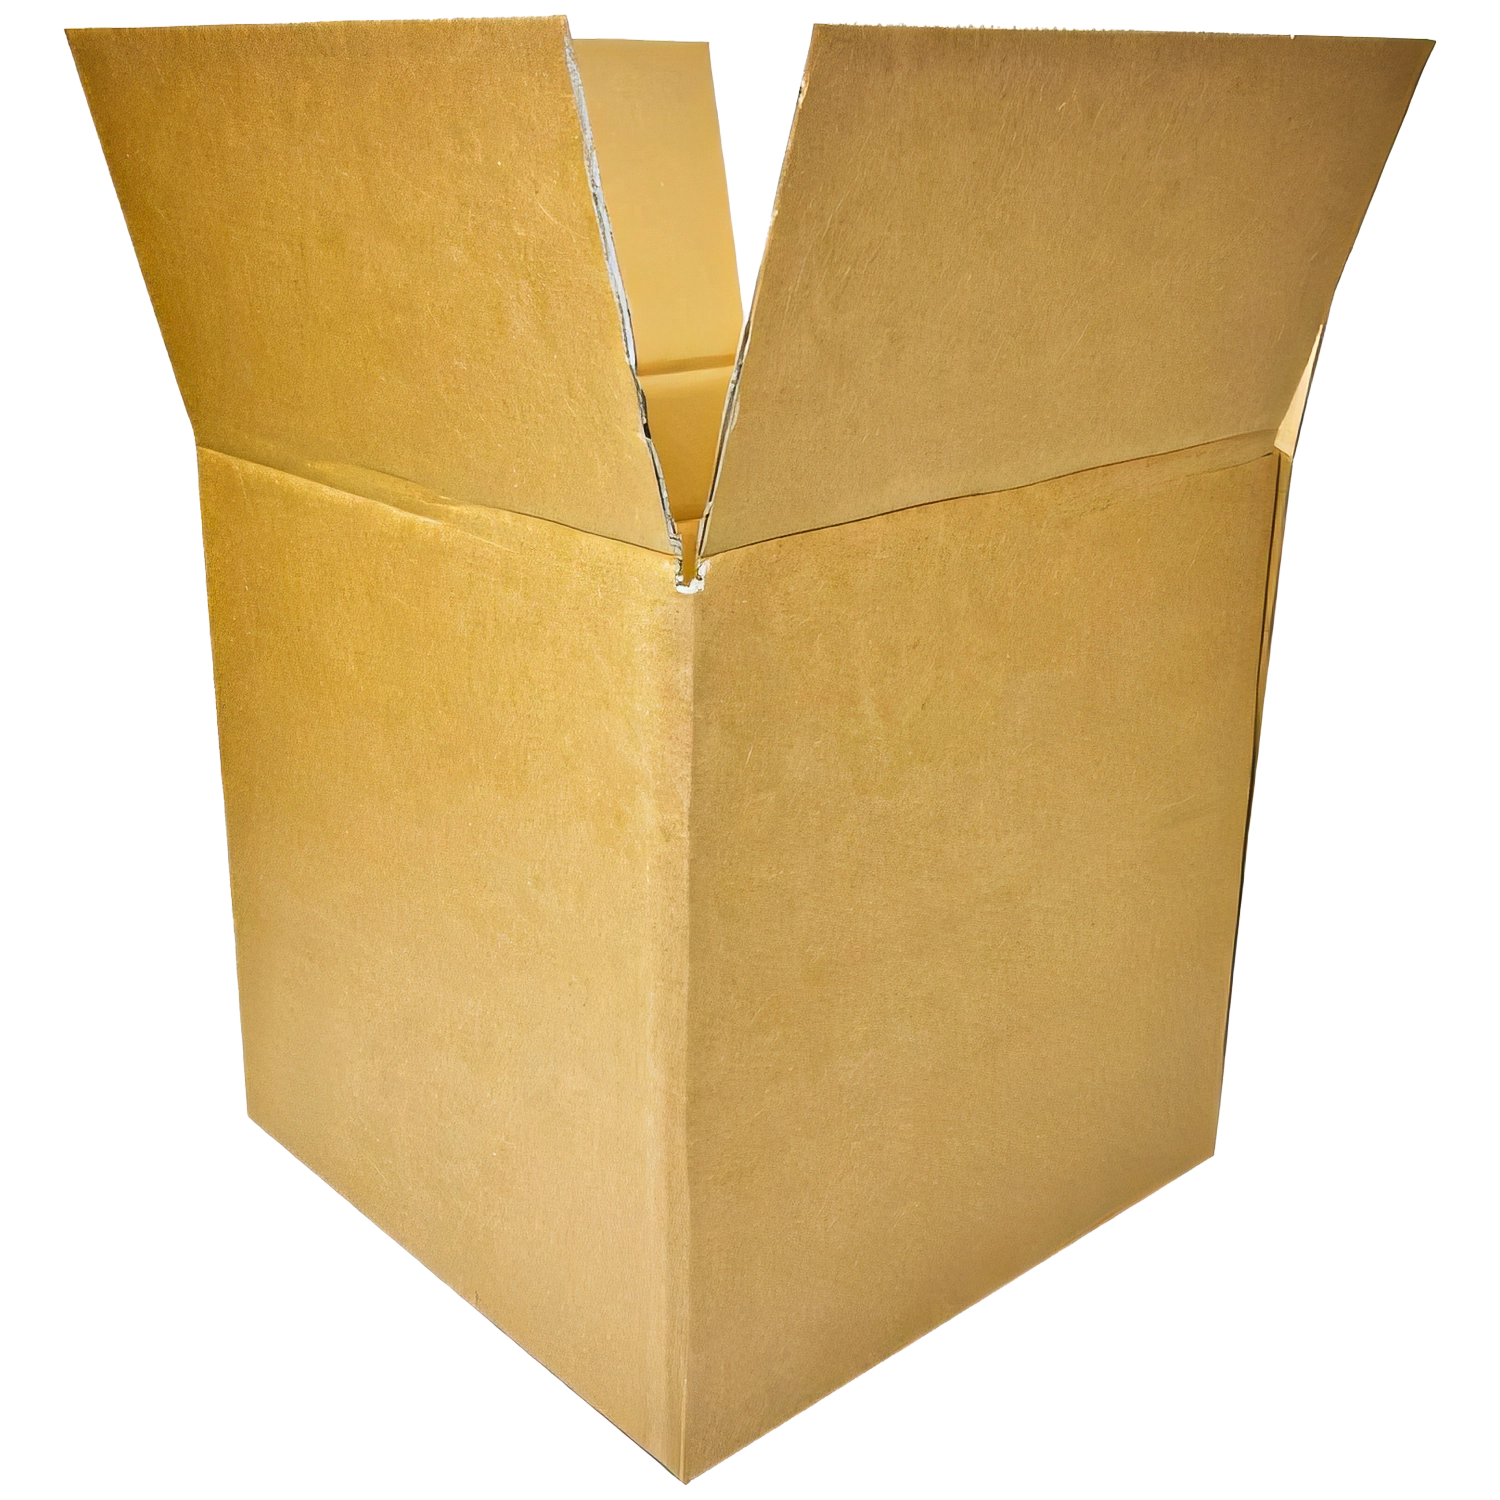 Large Cardboard Boxes - Heavy Duty Single Wall - 10x10x10 Inch